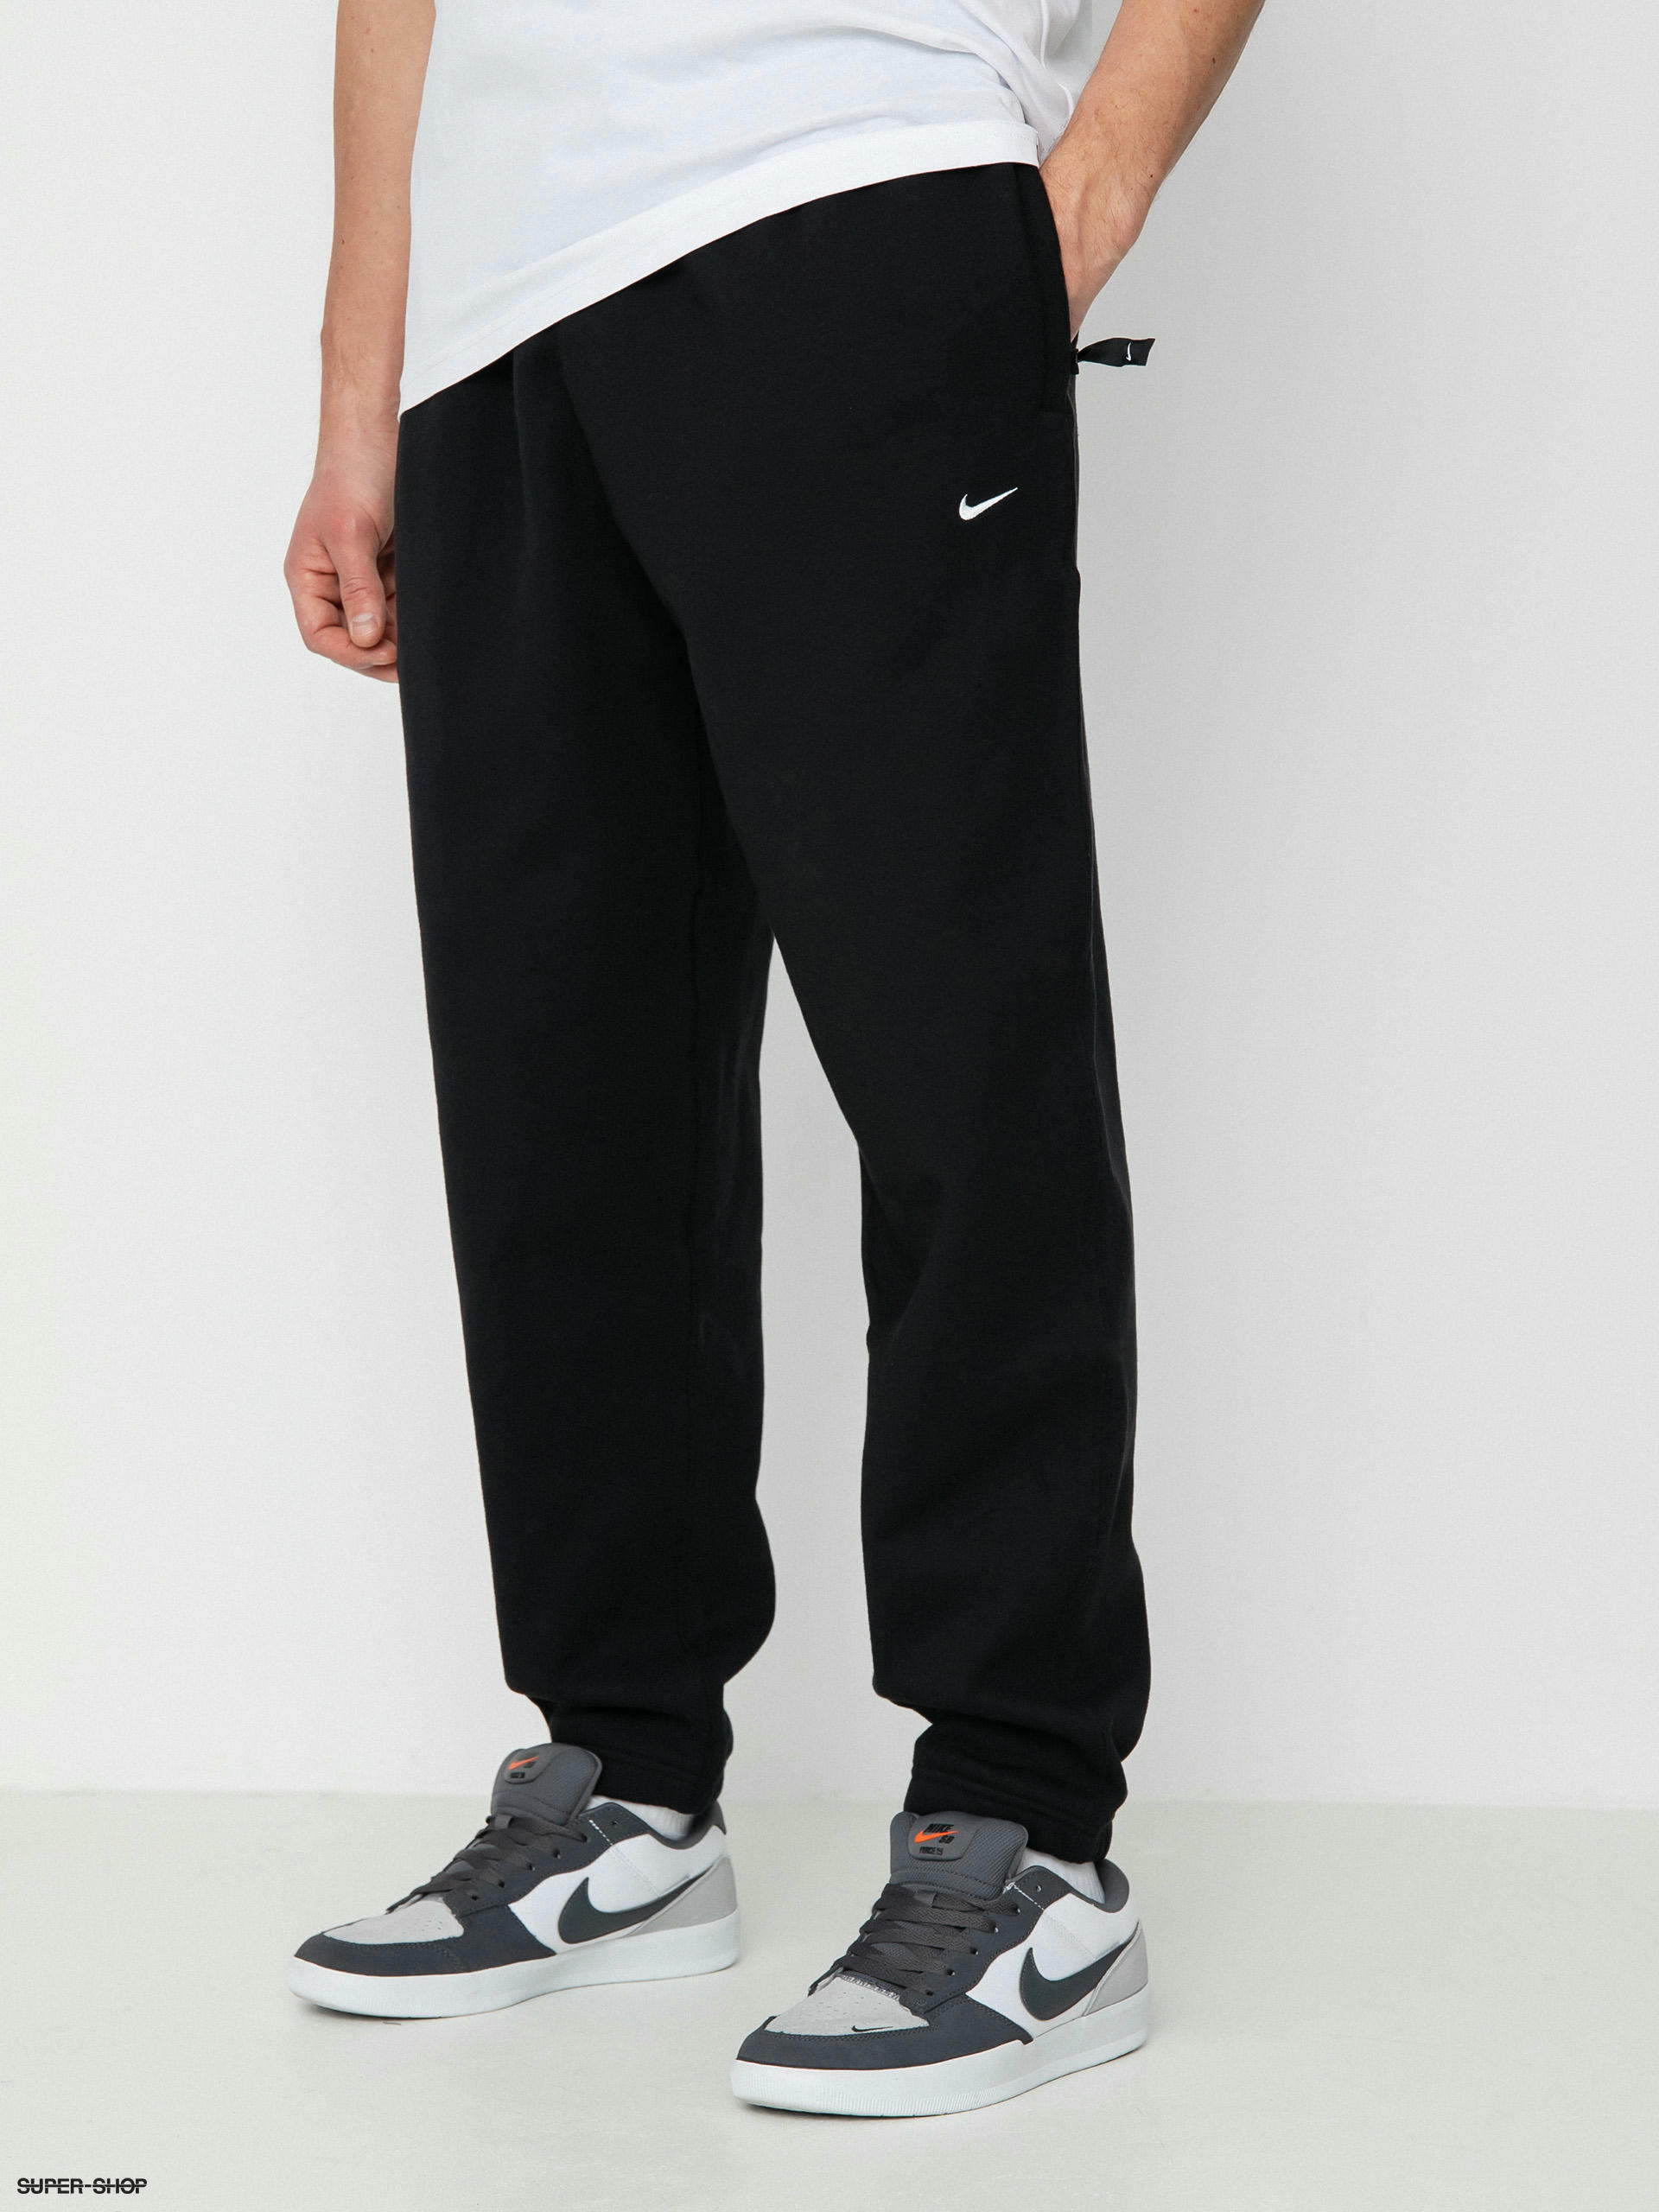 Nike Swoosh woven high waist paneled pants in cream | ASOS